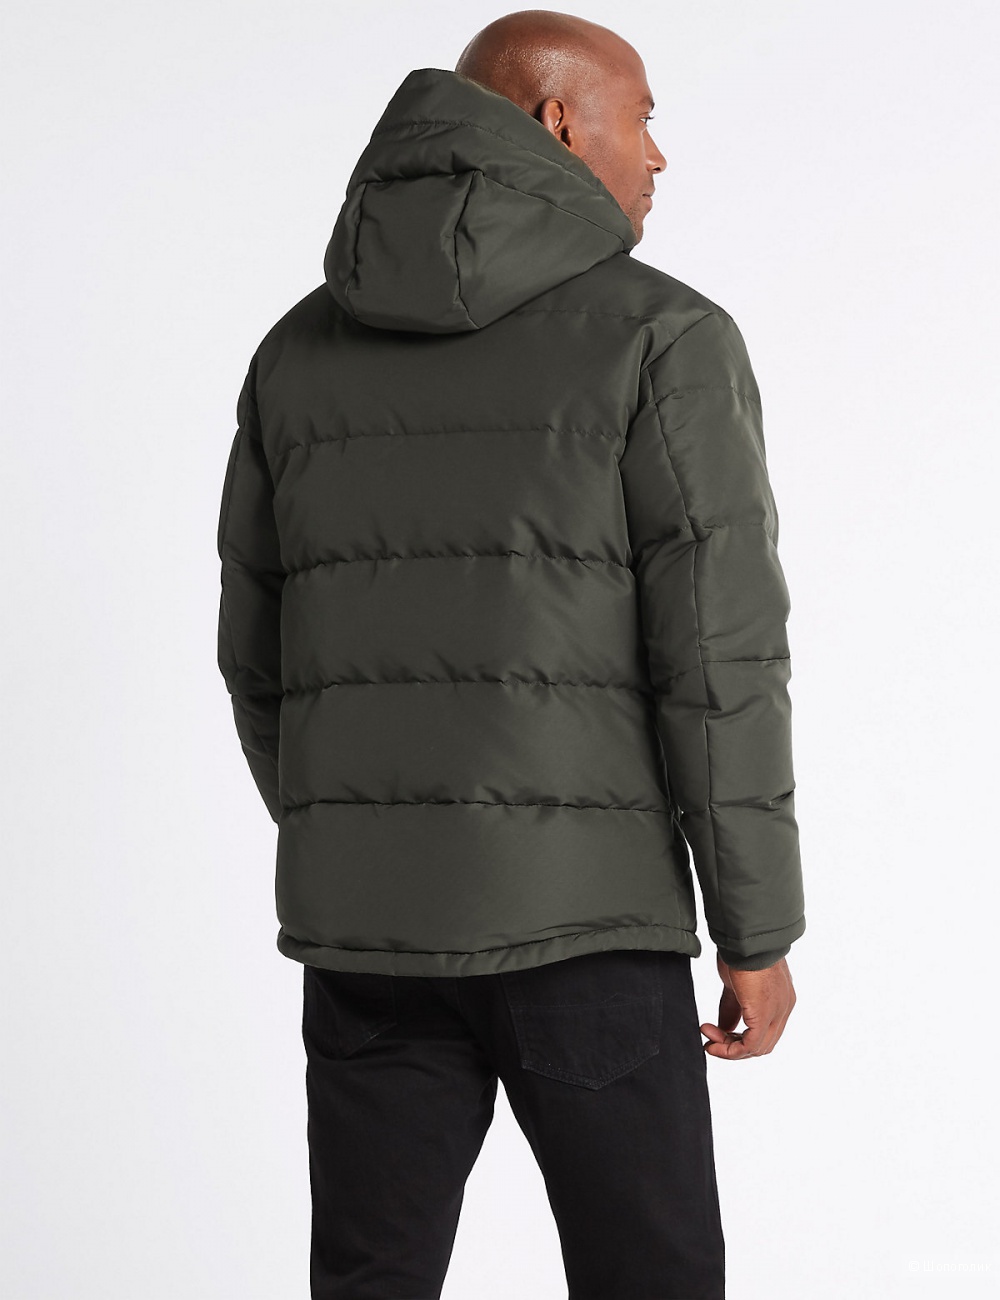 Куртка - пуховик  Marks & Spencer  размер  L